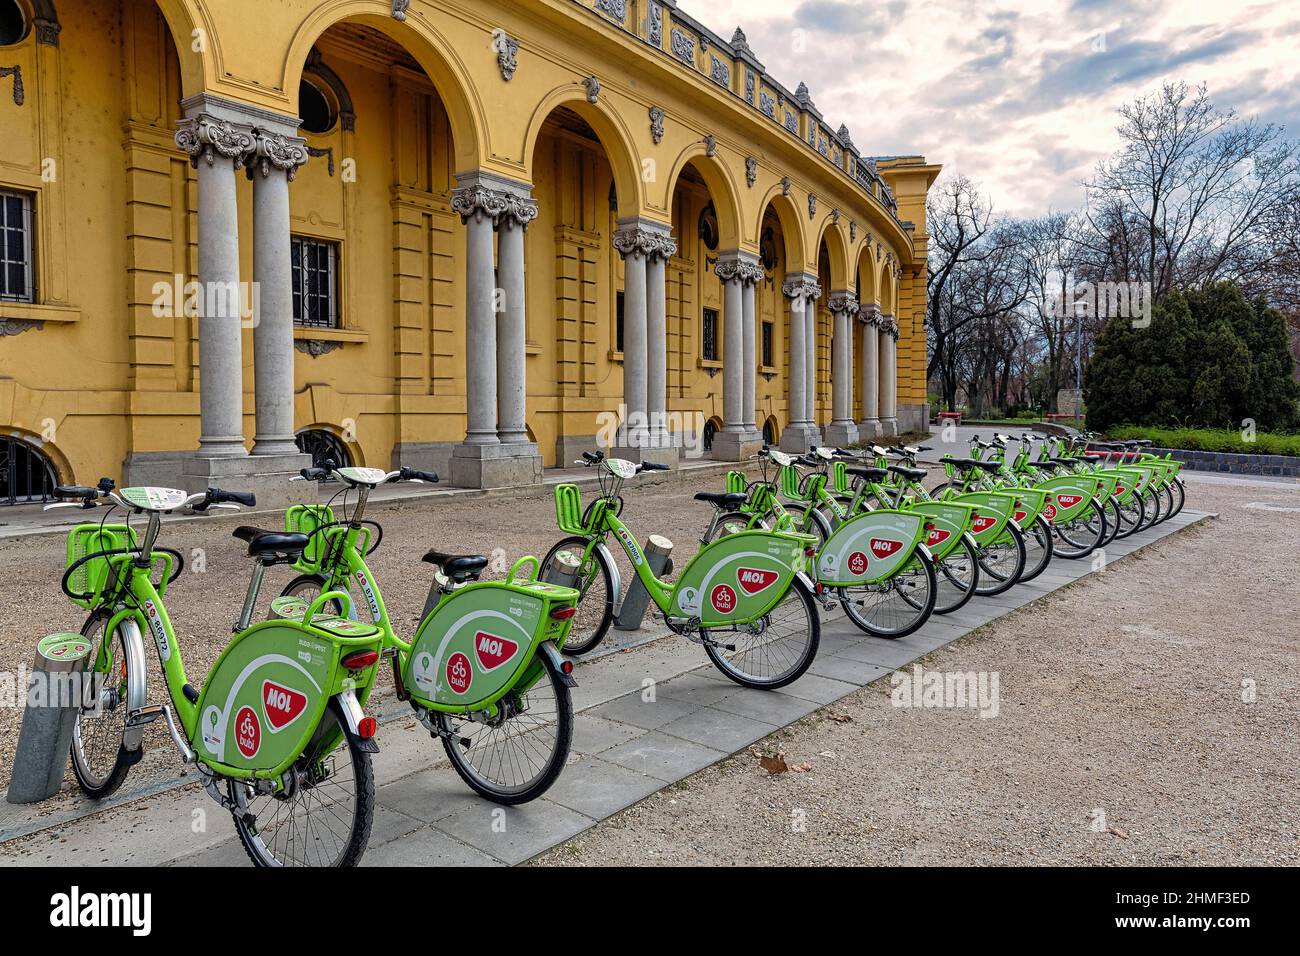 Noleggio bici verdi, stazione di biciclette a Szechenyi Spa, City Park, XIV  distretto, Pest, Budapest, Ungheria Foto stock - Alamy